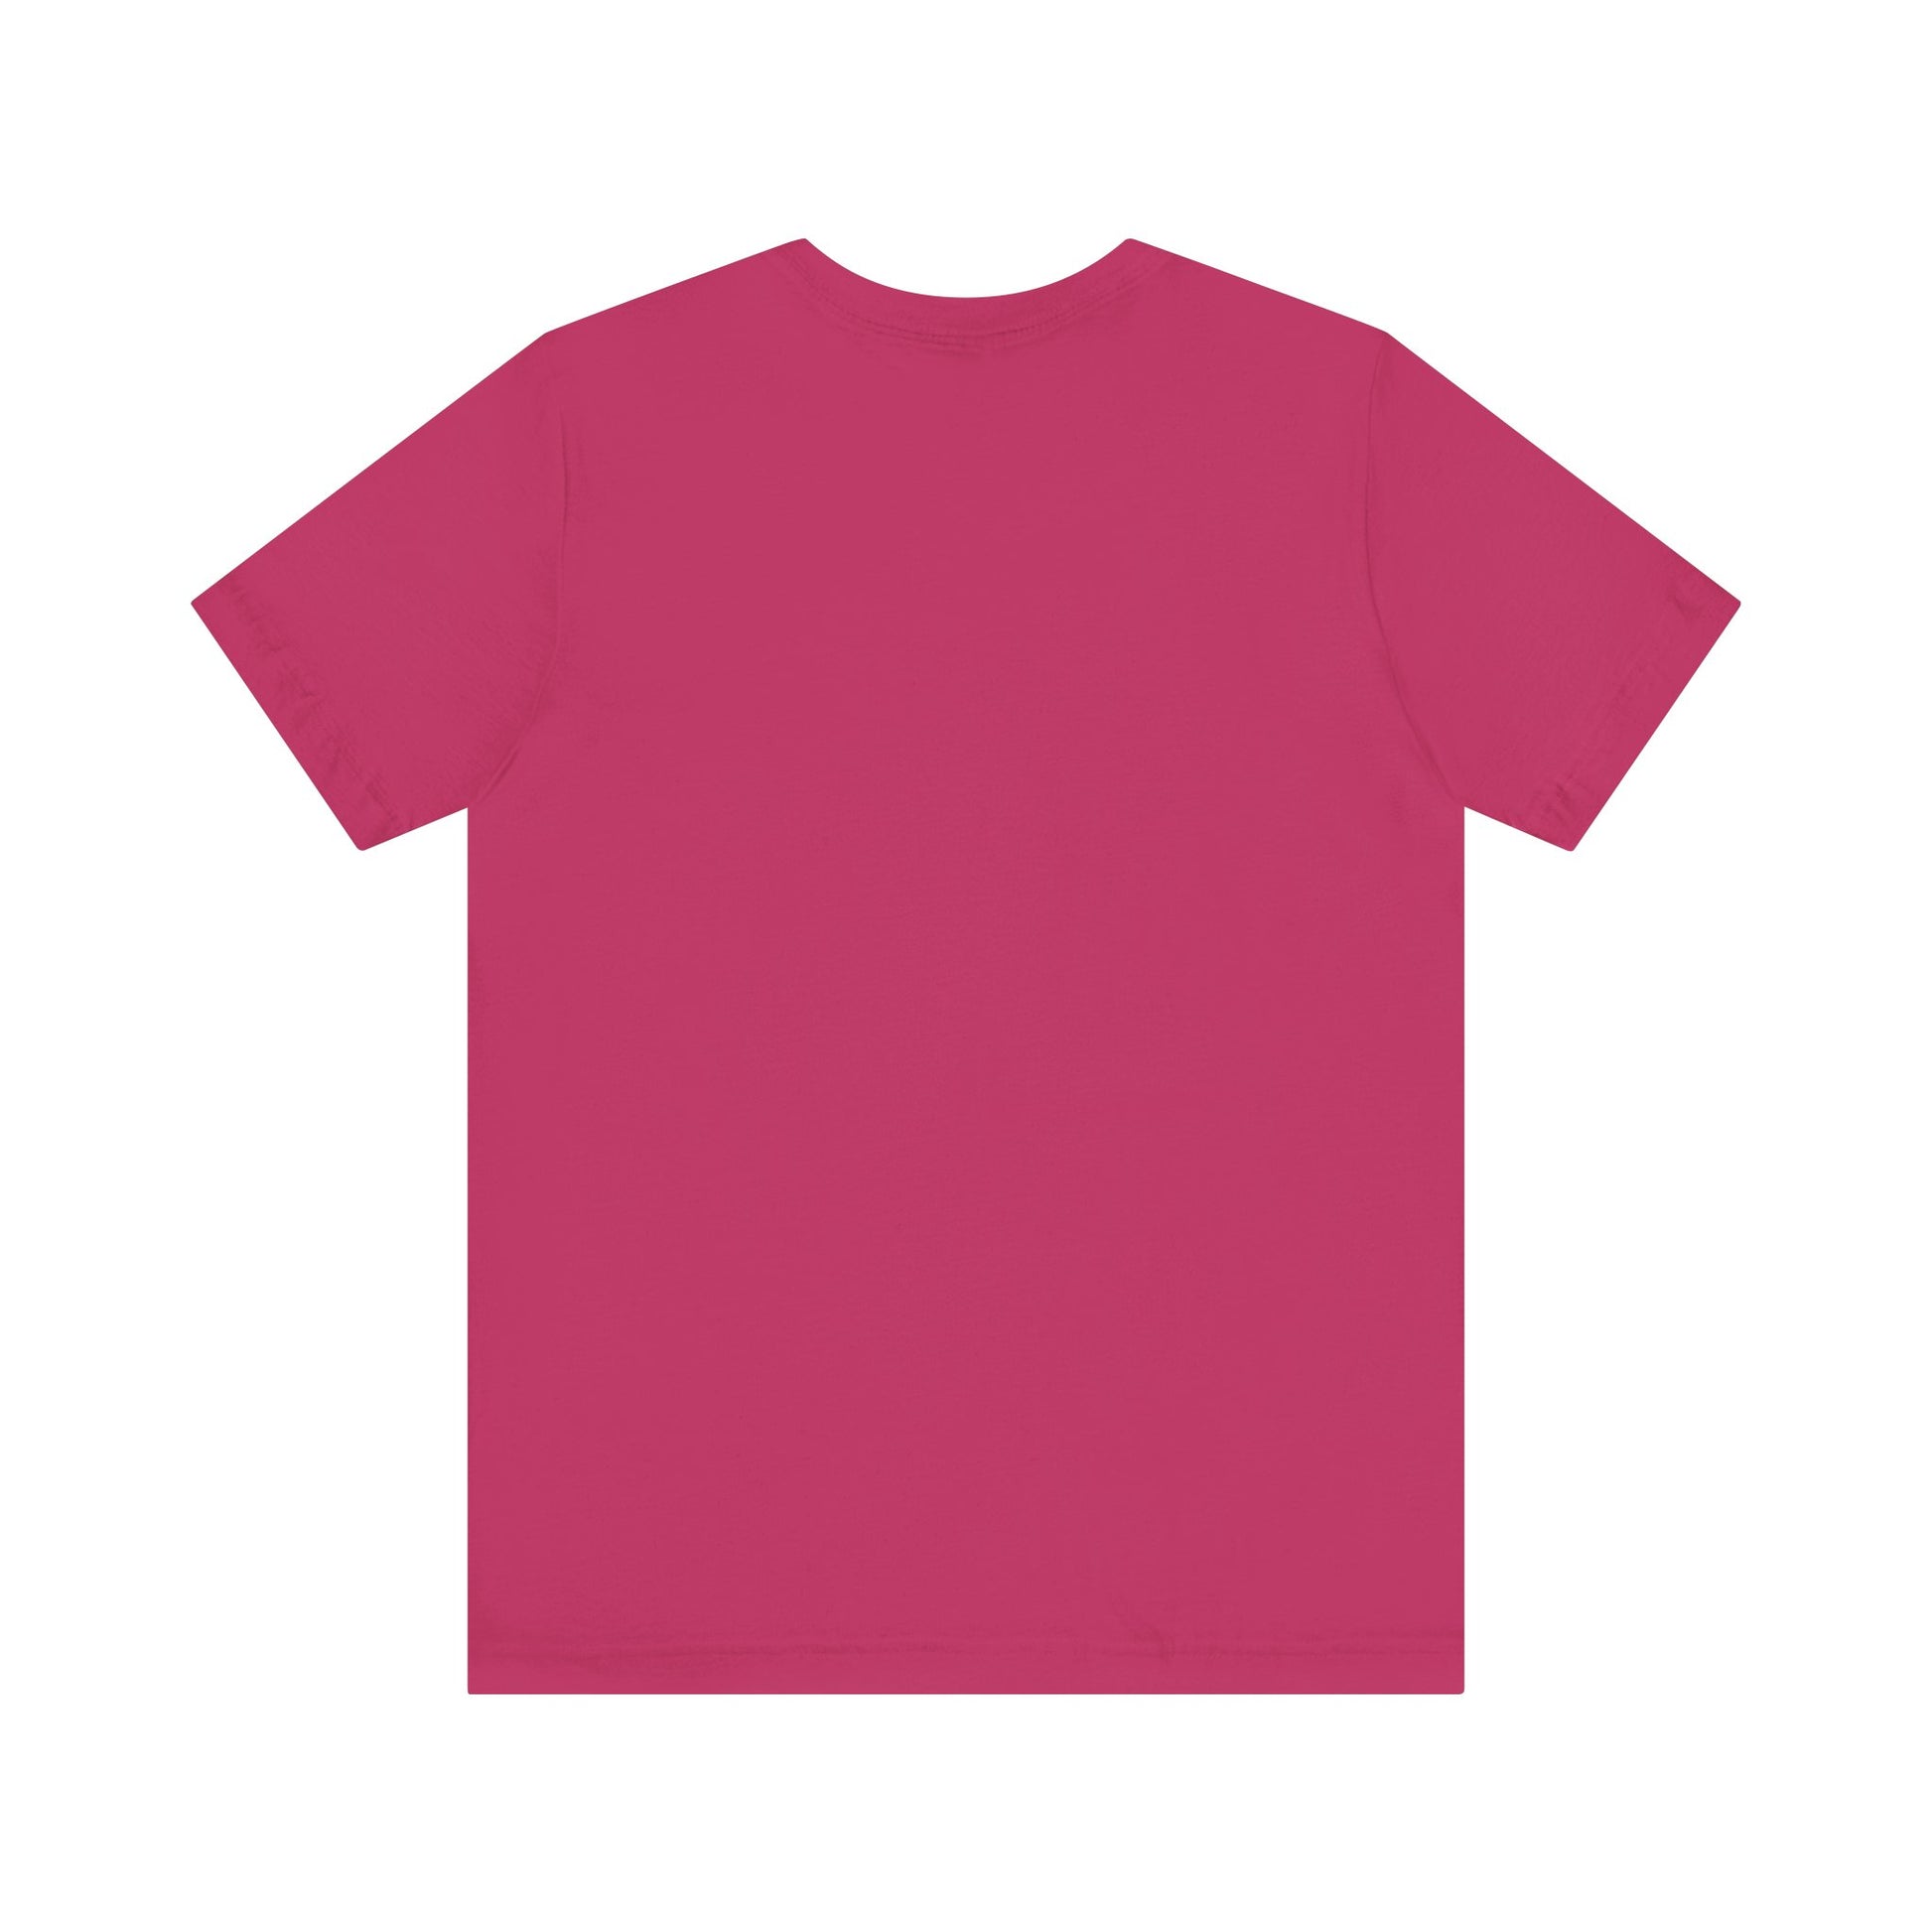 "Nana Flower Graphic T-Shirt Digital Download"